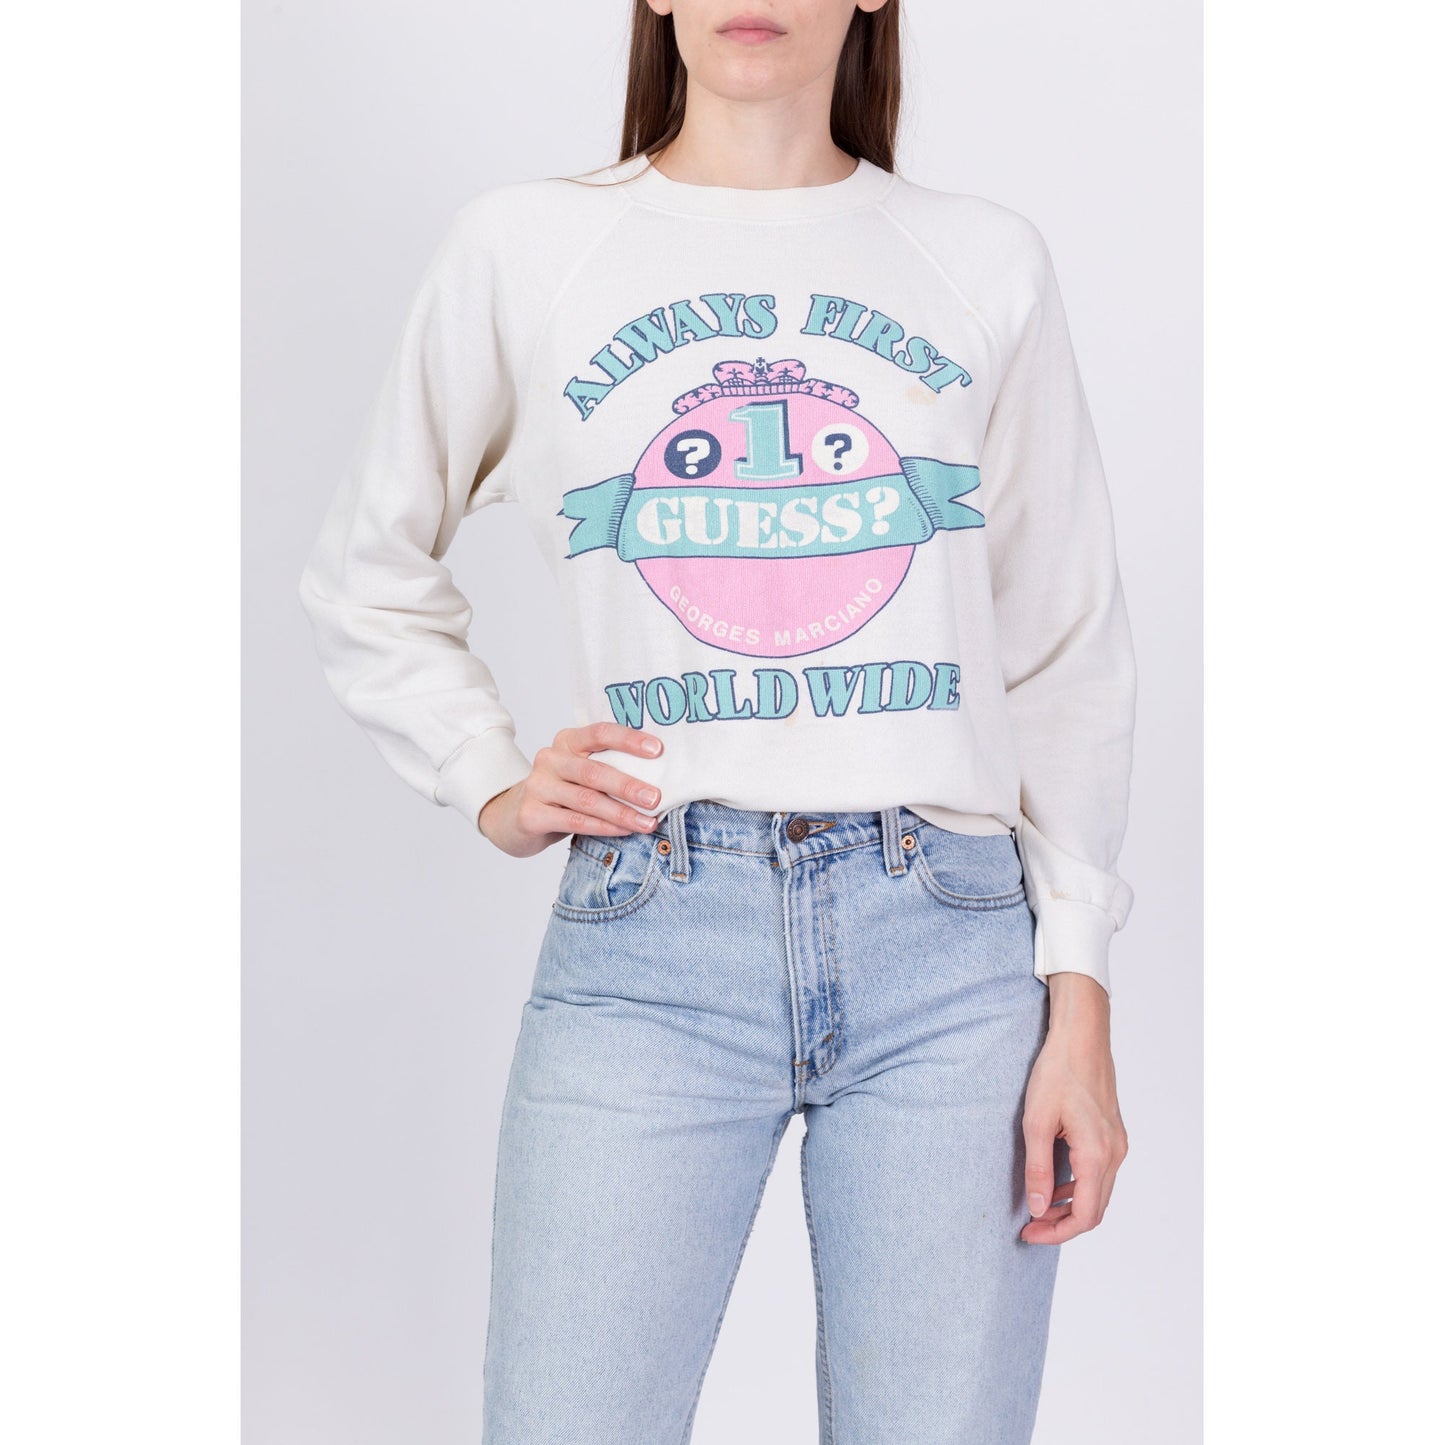 80s Guess Worldwide Sweatshirt - Men's Small, Women's Medium 